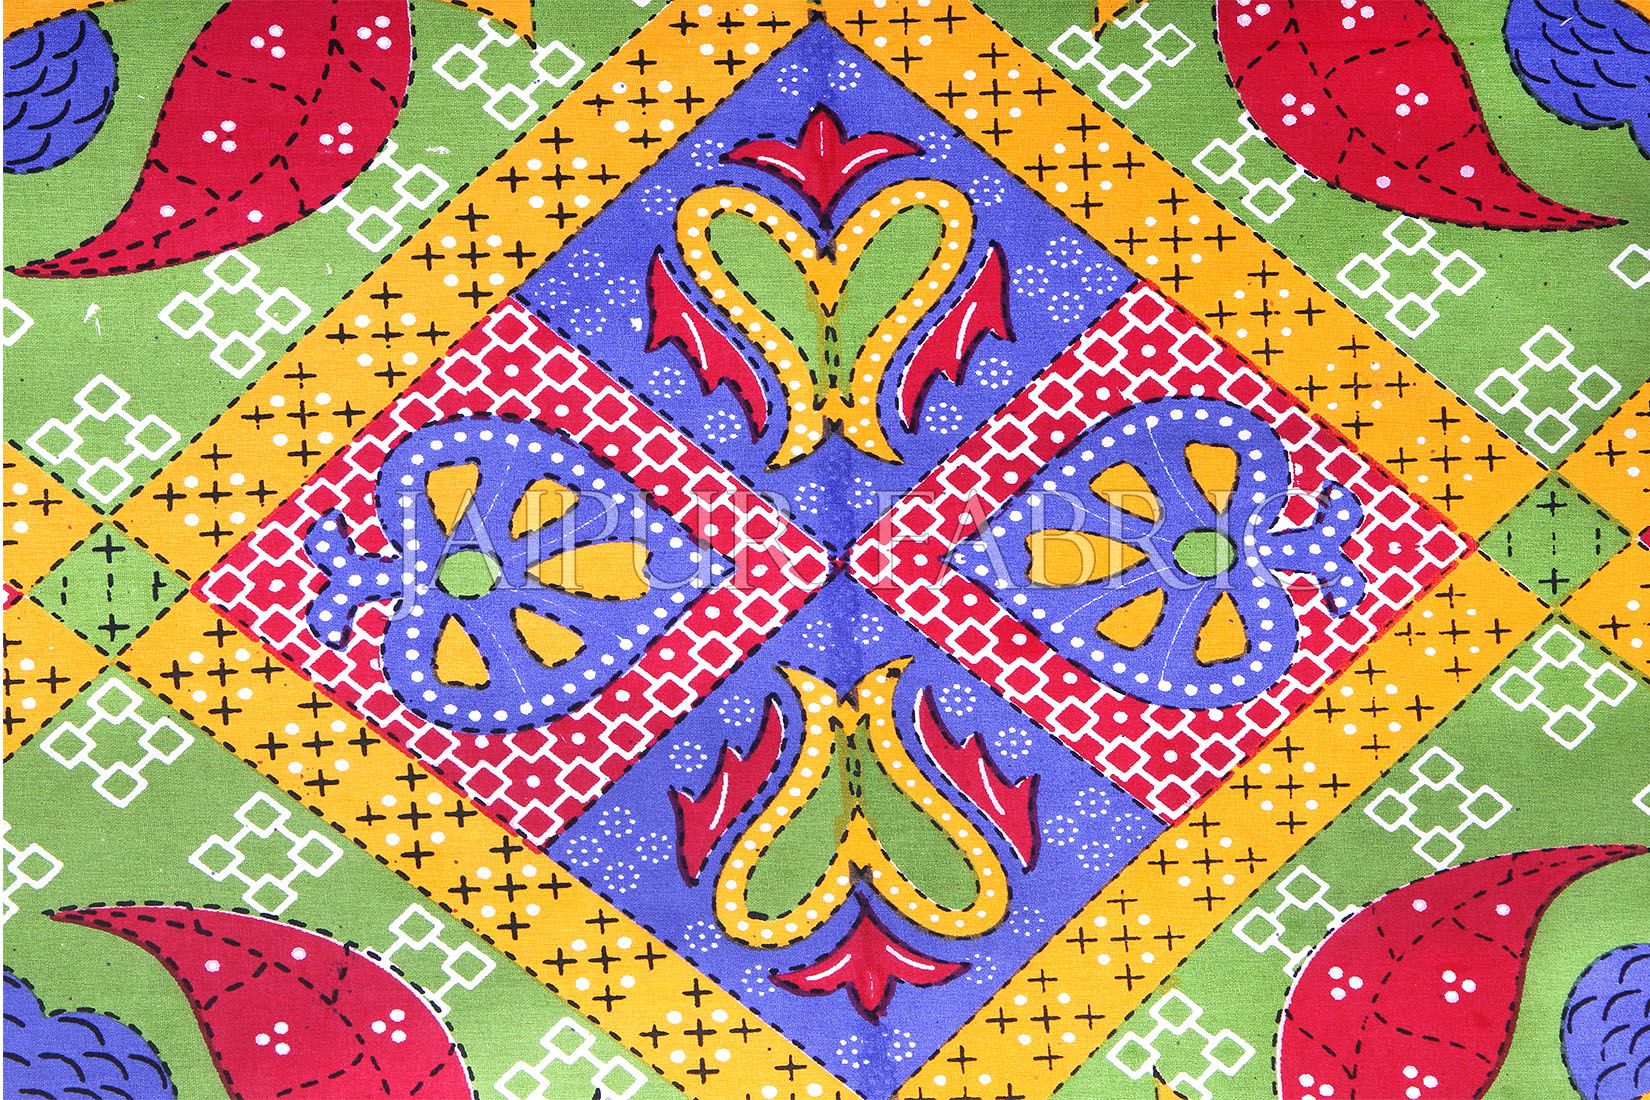 Blue Border Rajasthani Paan Patta Print Cotton Single Bed Sheet